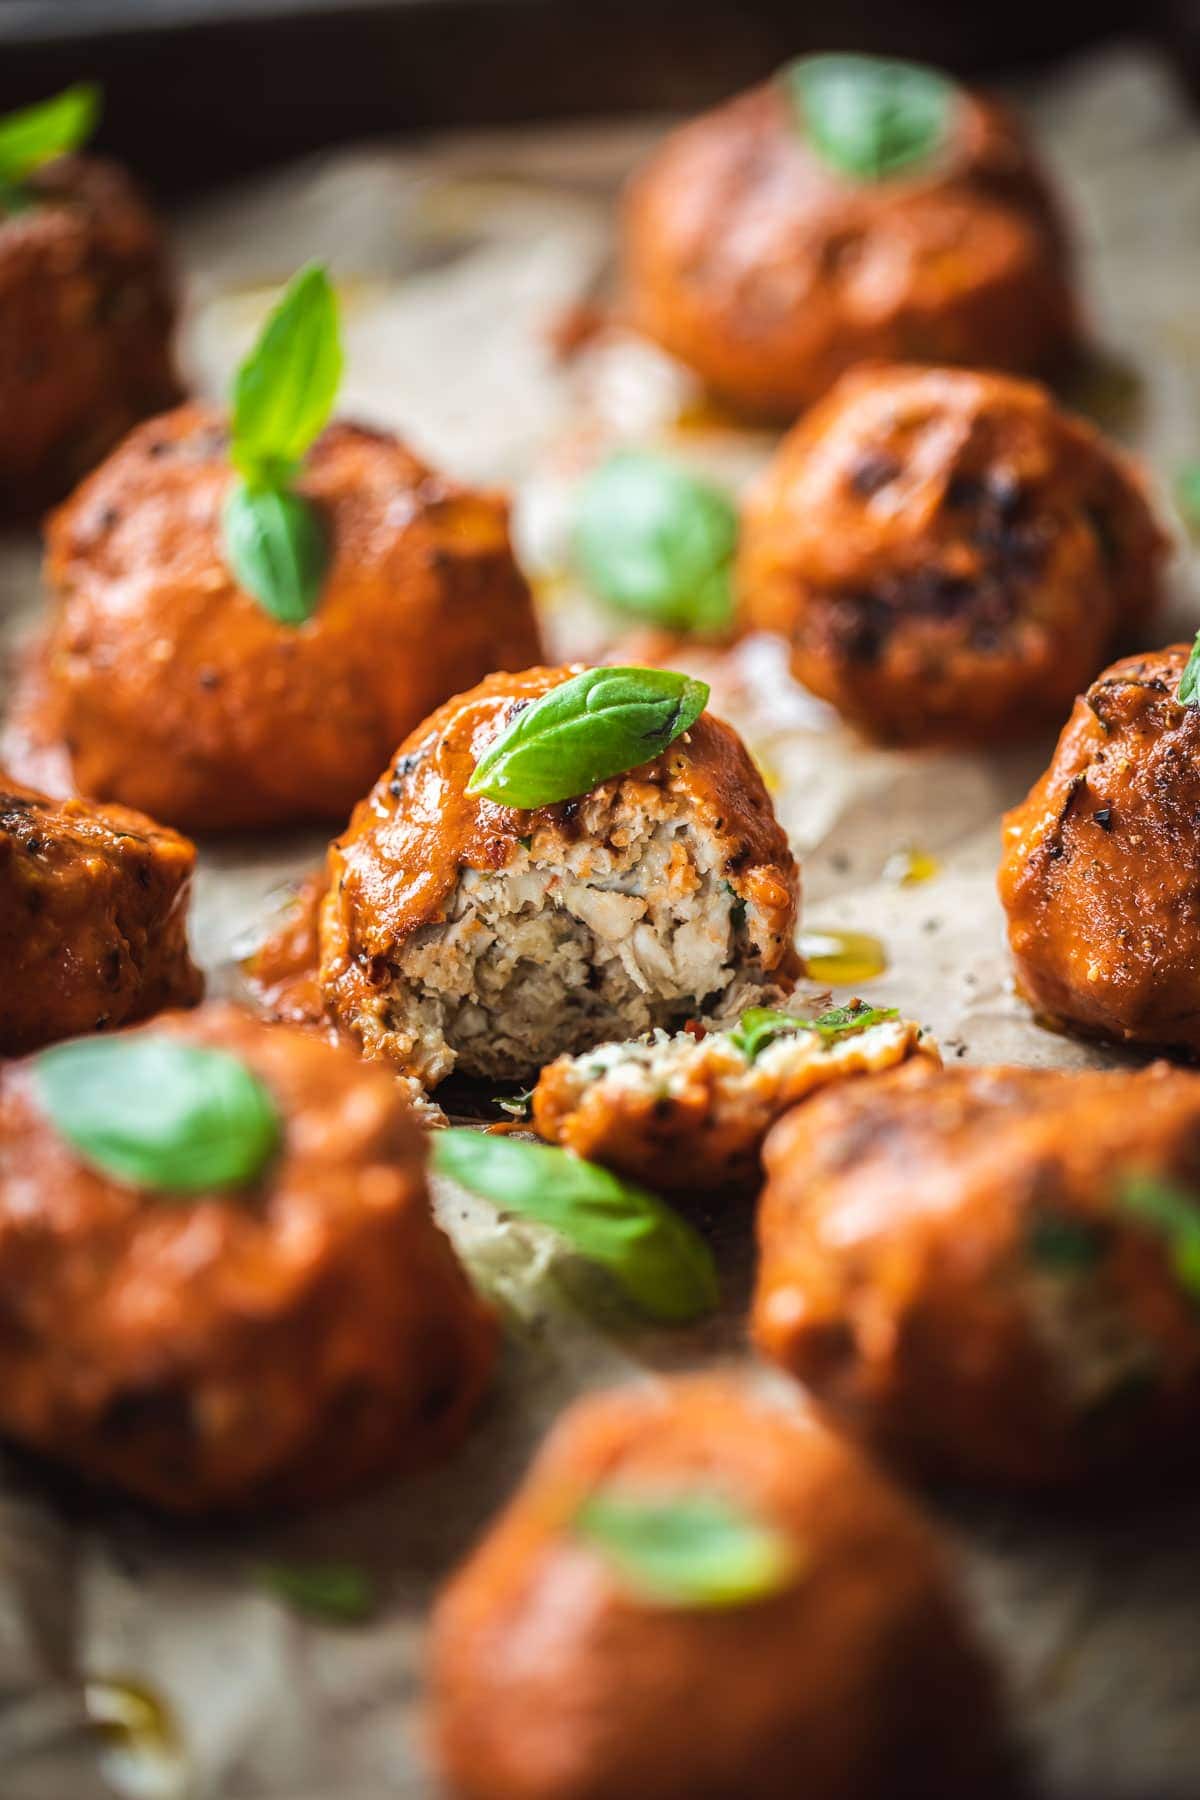 Healthier Chicken Meatballs In Marinara Sauce - Cook Republic #dairyfree